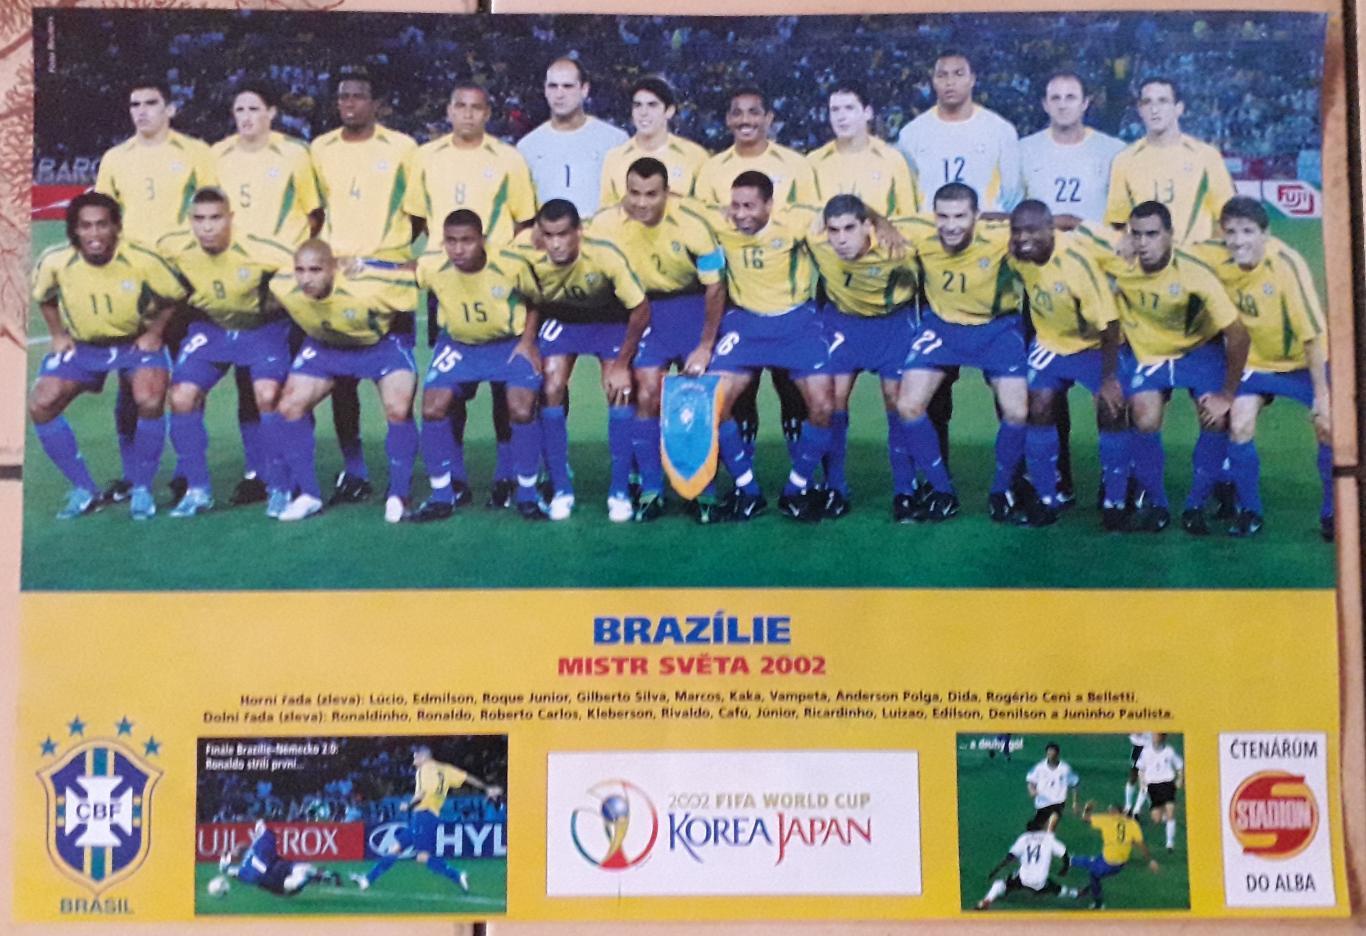 Brazilie WC 2002. Плакат формата А4 из журнала Stadion.